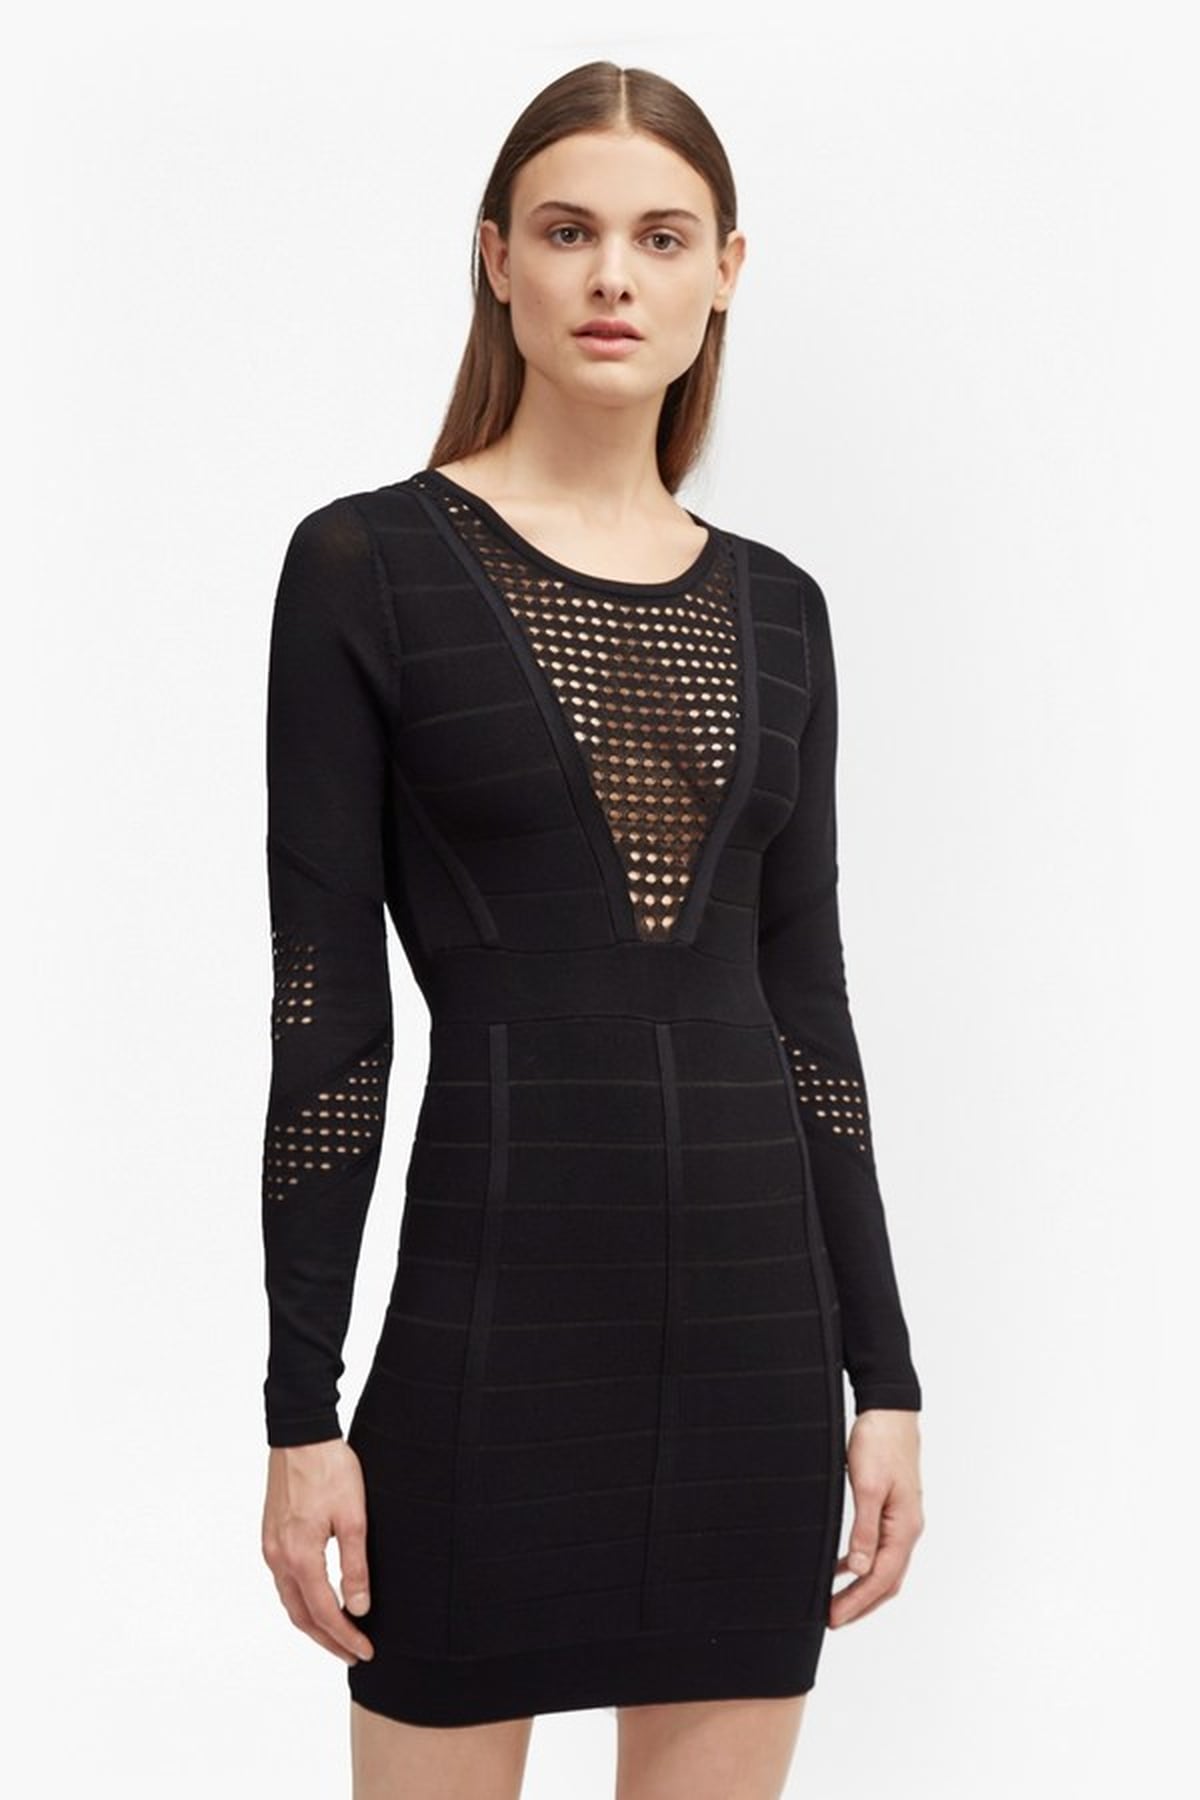 Sexy Black Dress | POPSUGAR Fashion